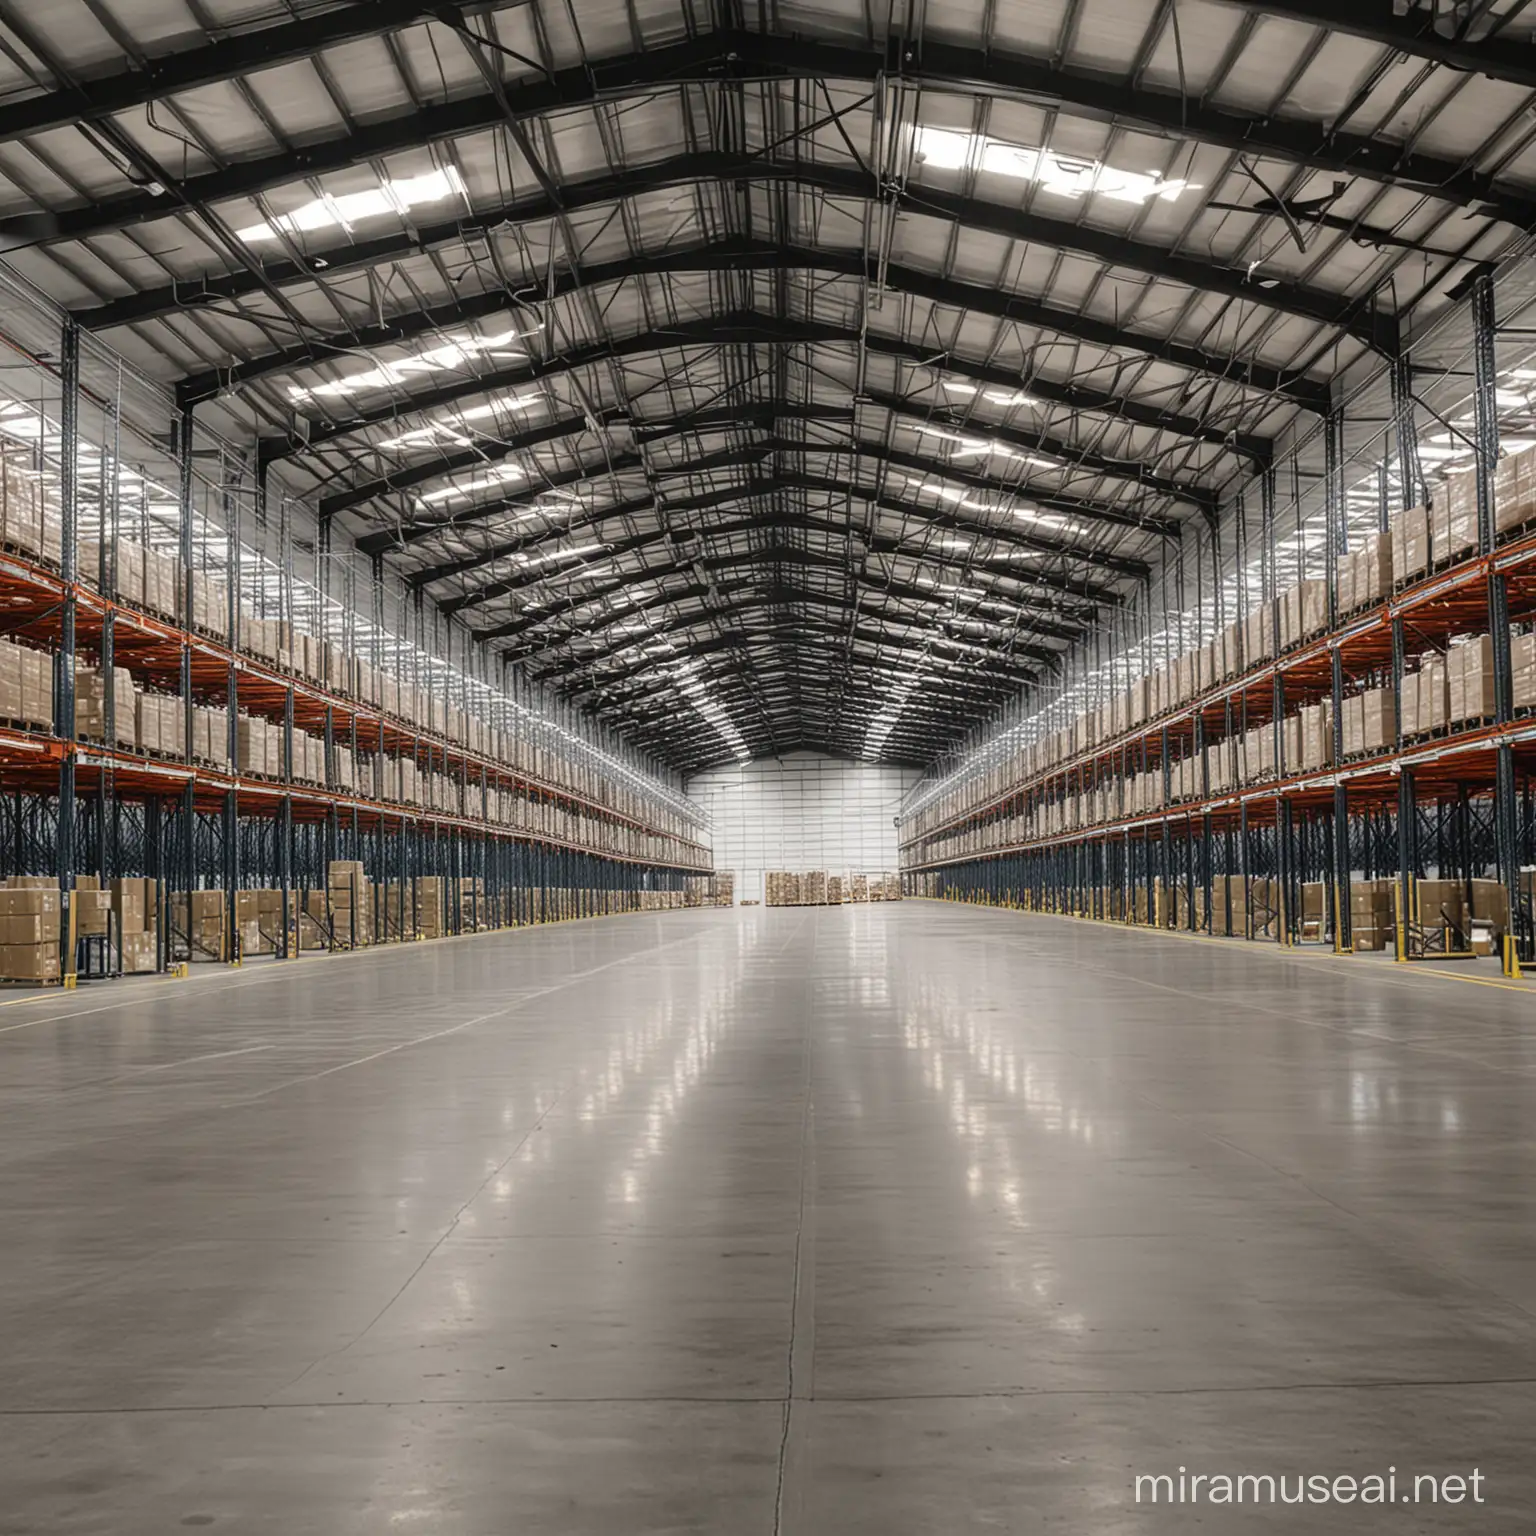 Efficient Warehouse Operations StateoftheArt Warehousing Facility